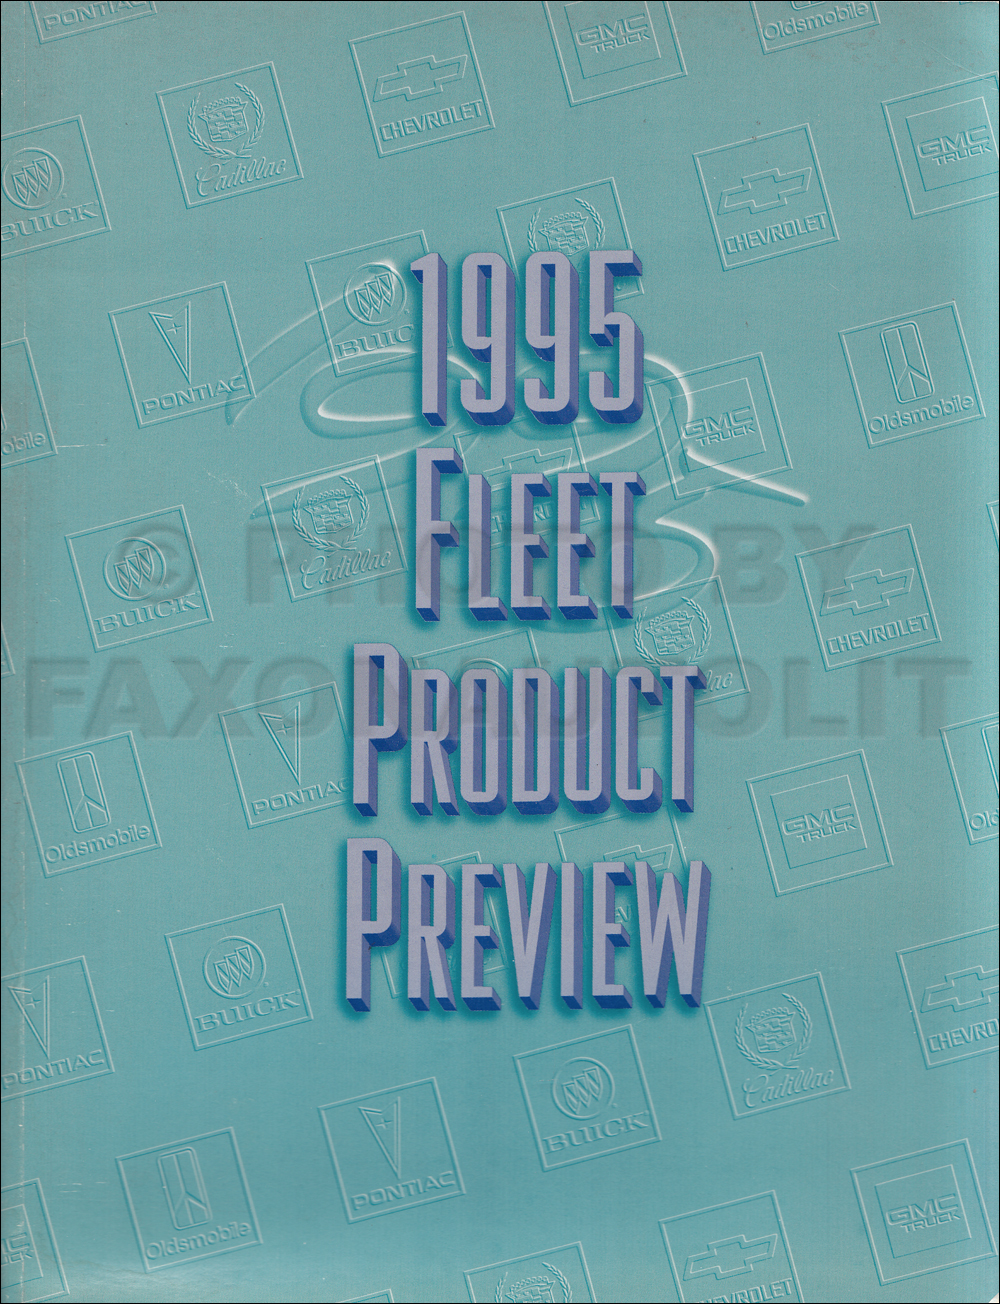 1995 General Motors Fleet Buyers Guide Preview Original GM Dealer Album